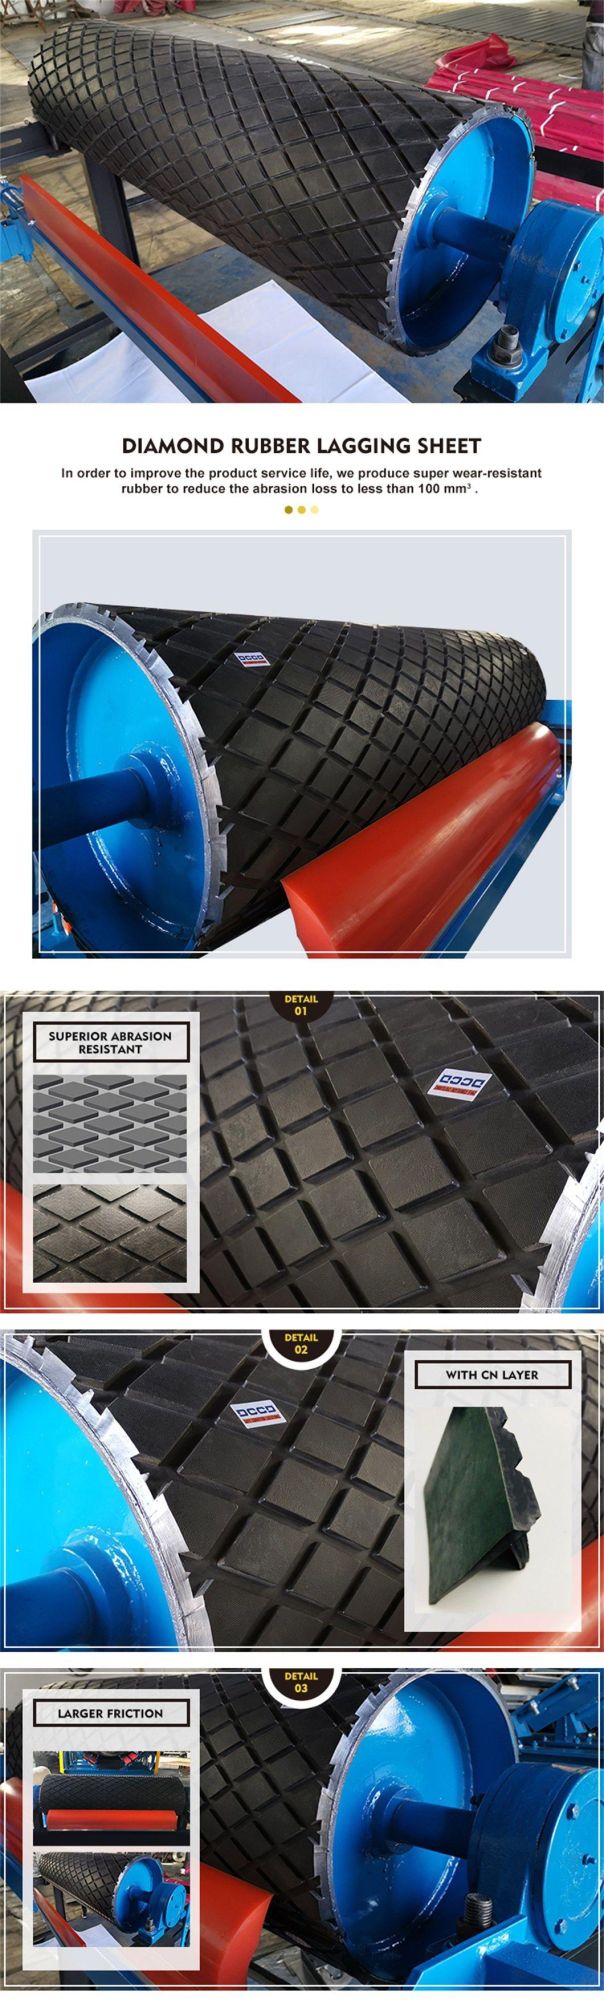 High Wear Resistant Conveyor Drum Pulley Lagging Belt Conveyor for Coal